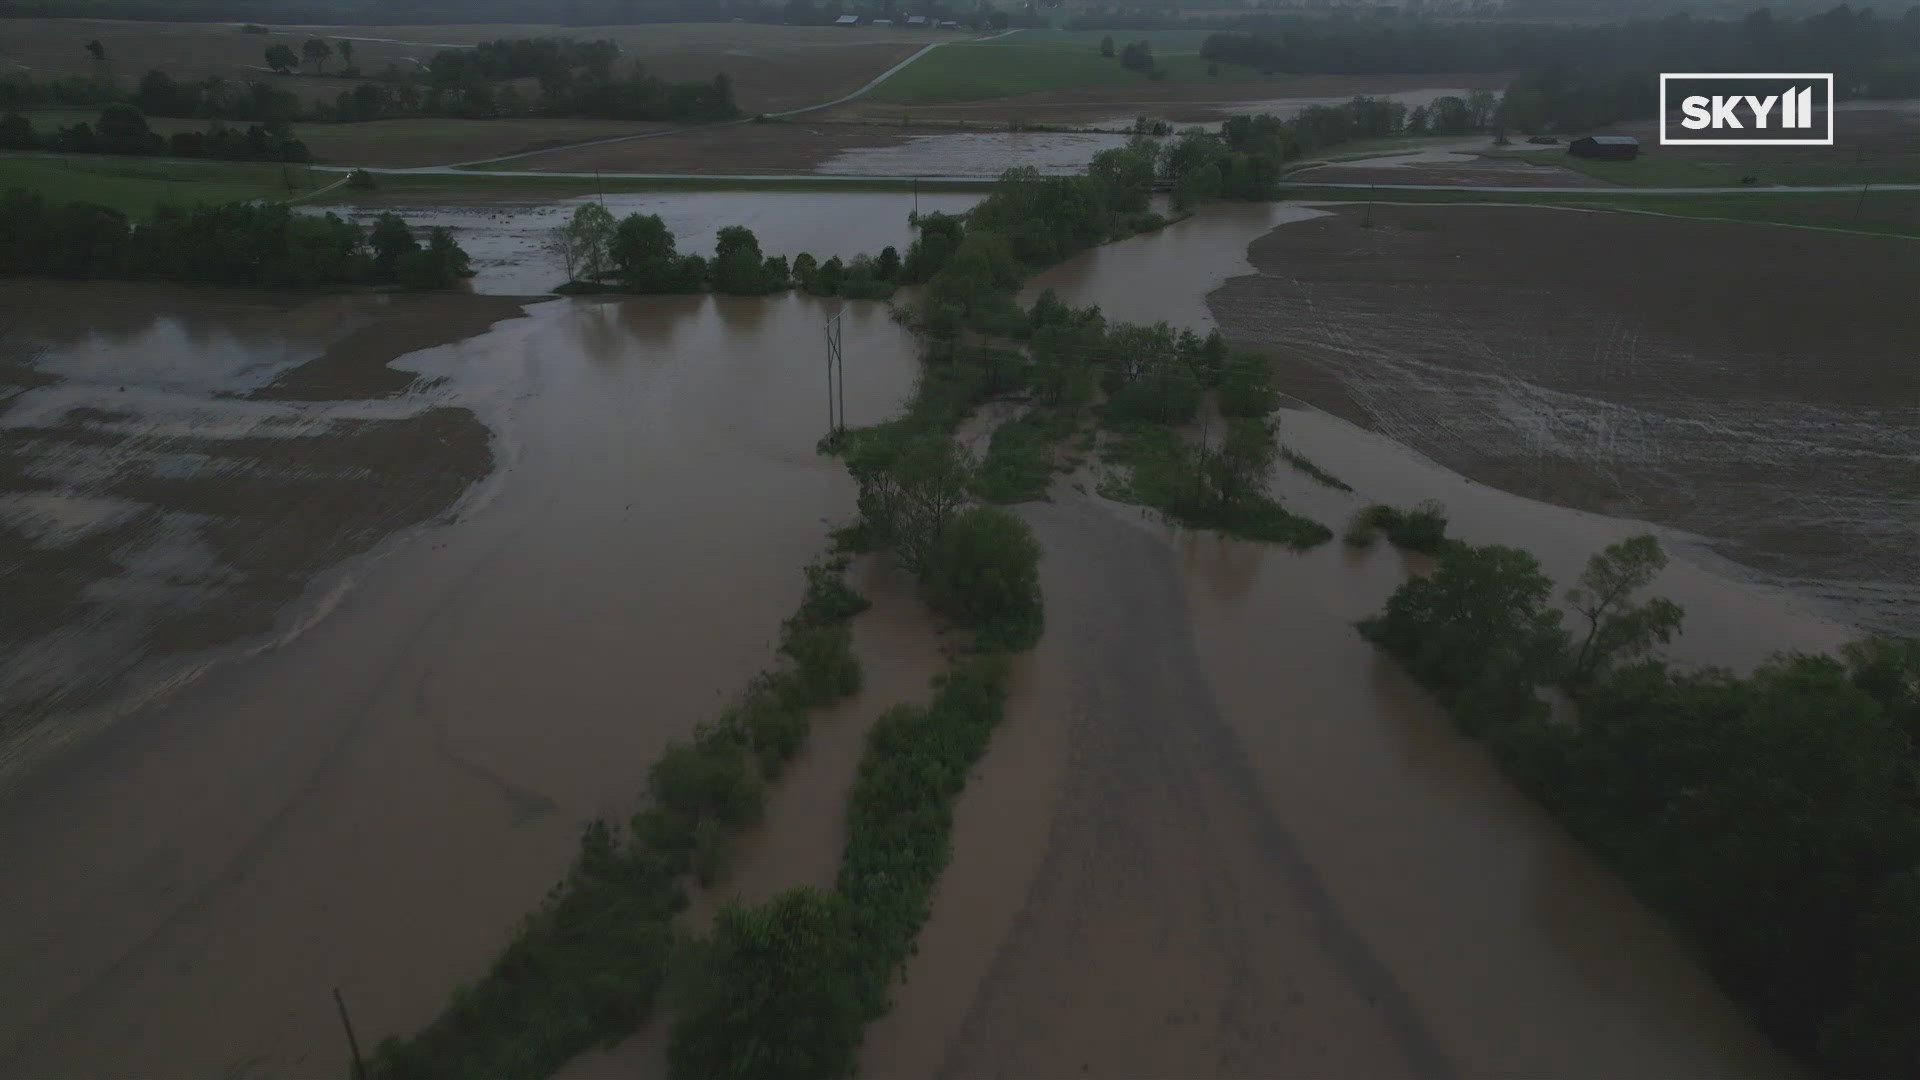 Drone video shows flooding near Walter's Creek in Magnolia, Kentucky.